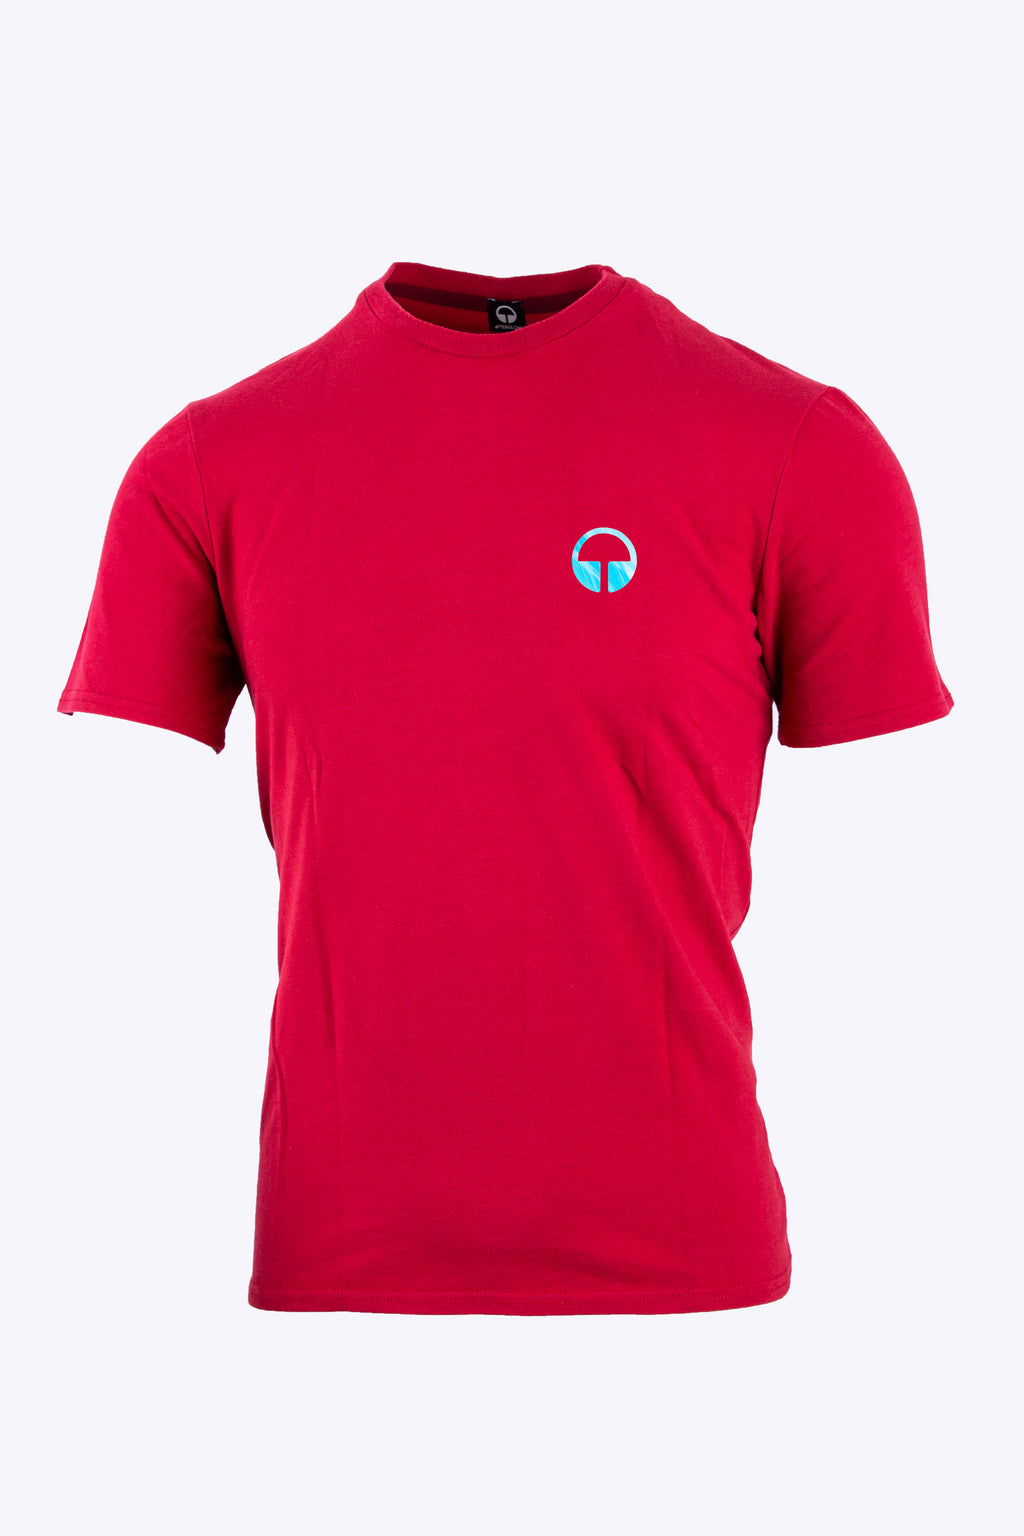 Men's Euphoric T-shirt - Red